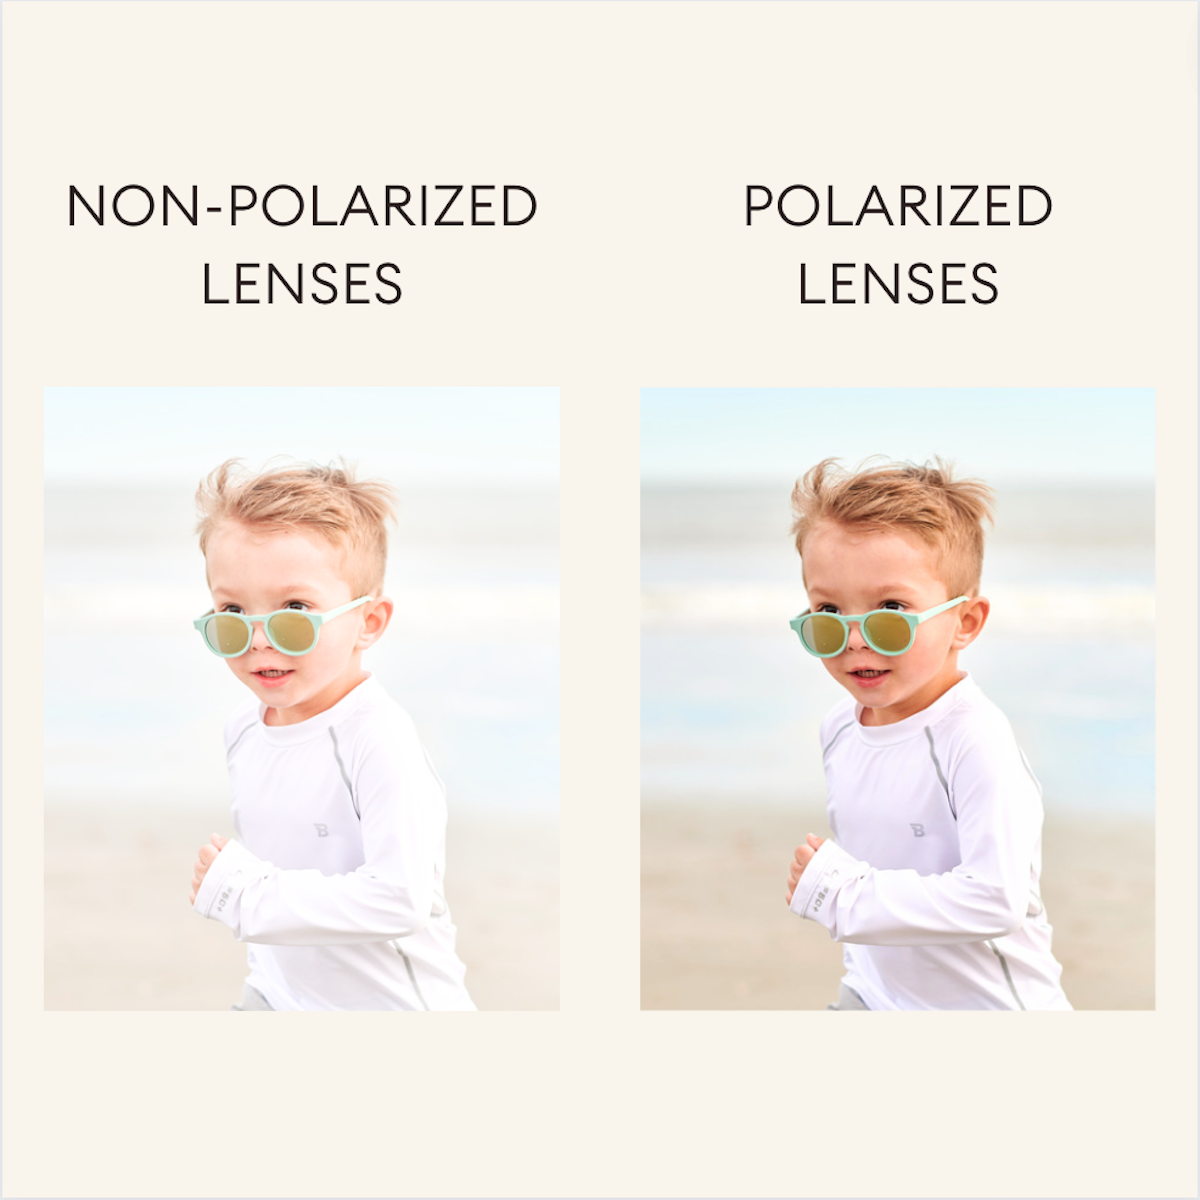 Sweet Cream Heart | Rose Gold Polarized Mirrored Lenses by Babiators